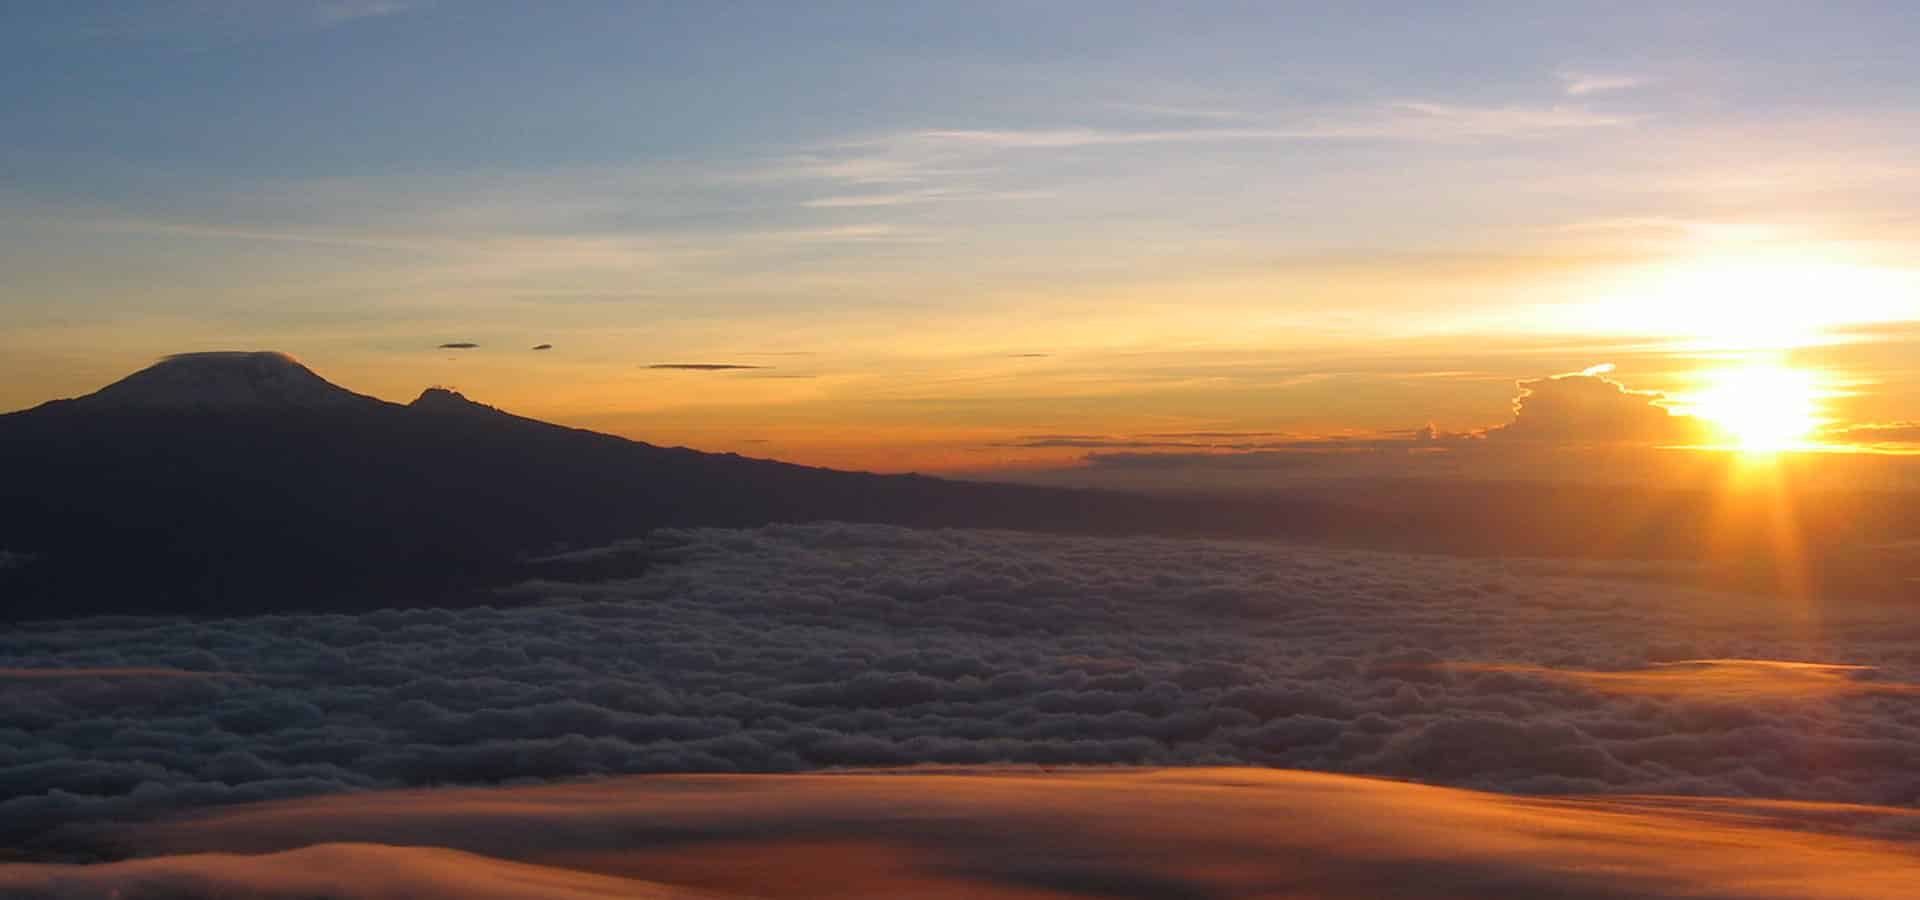 Mount Meru Trek